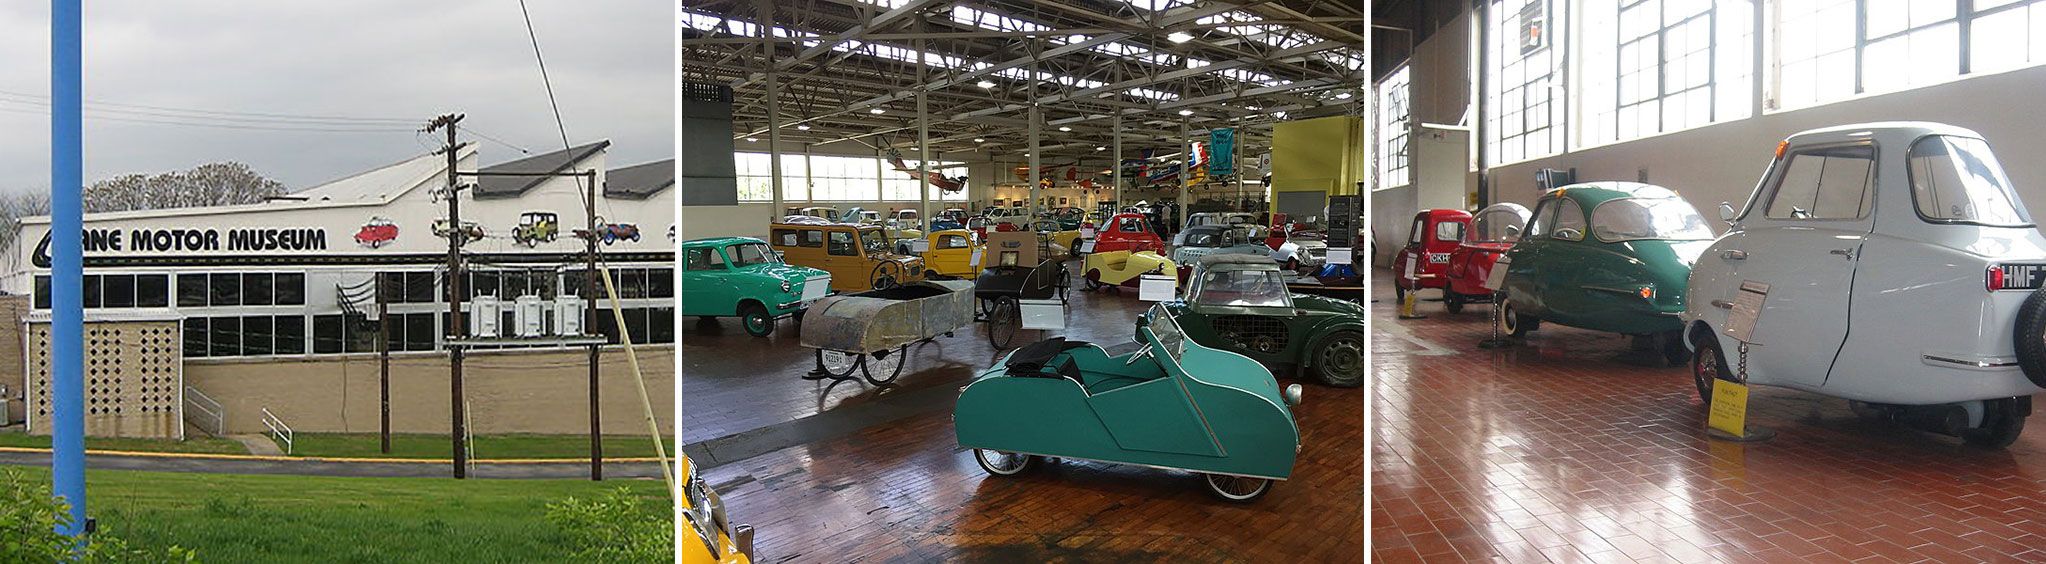 Lane Motor Museum in Nashville, TN